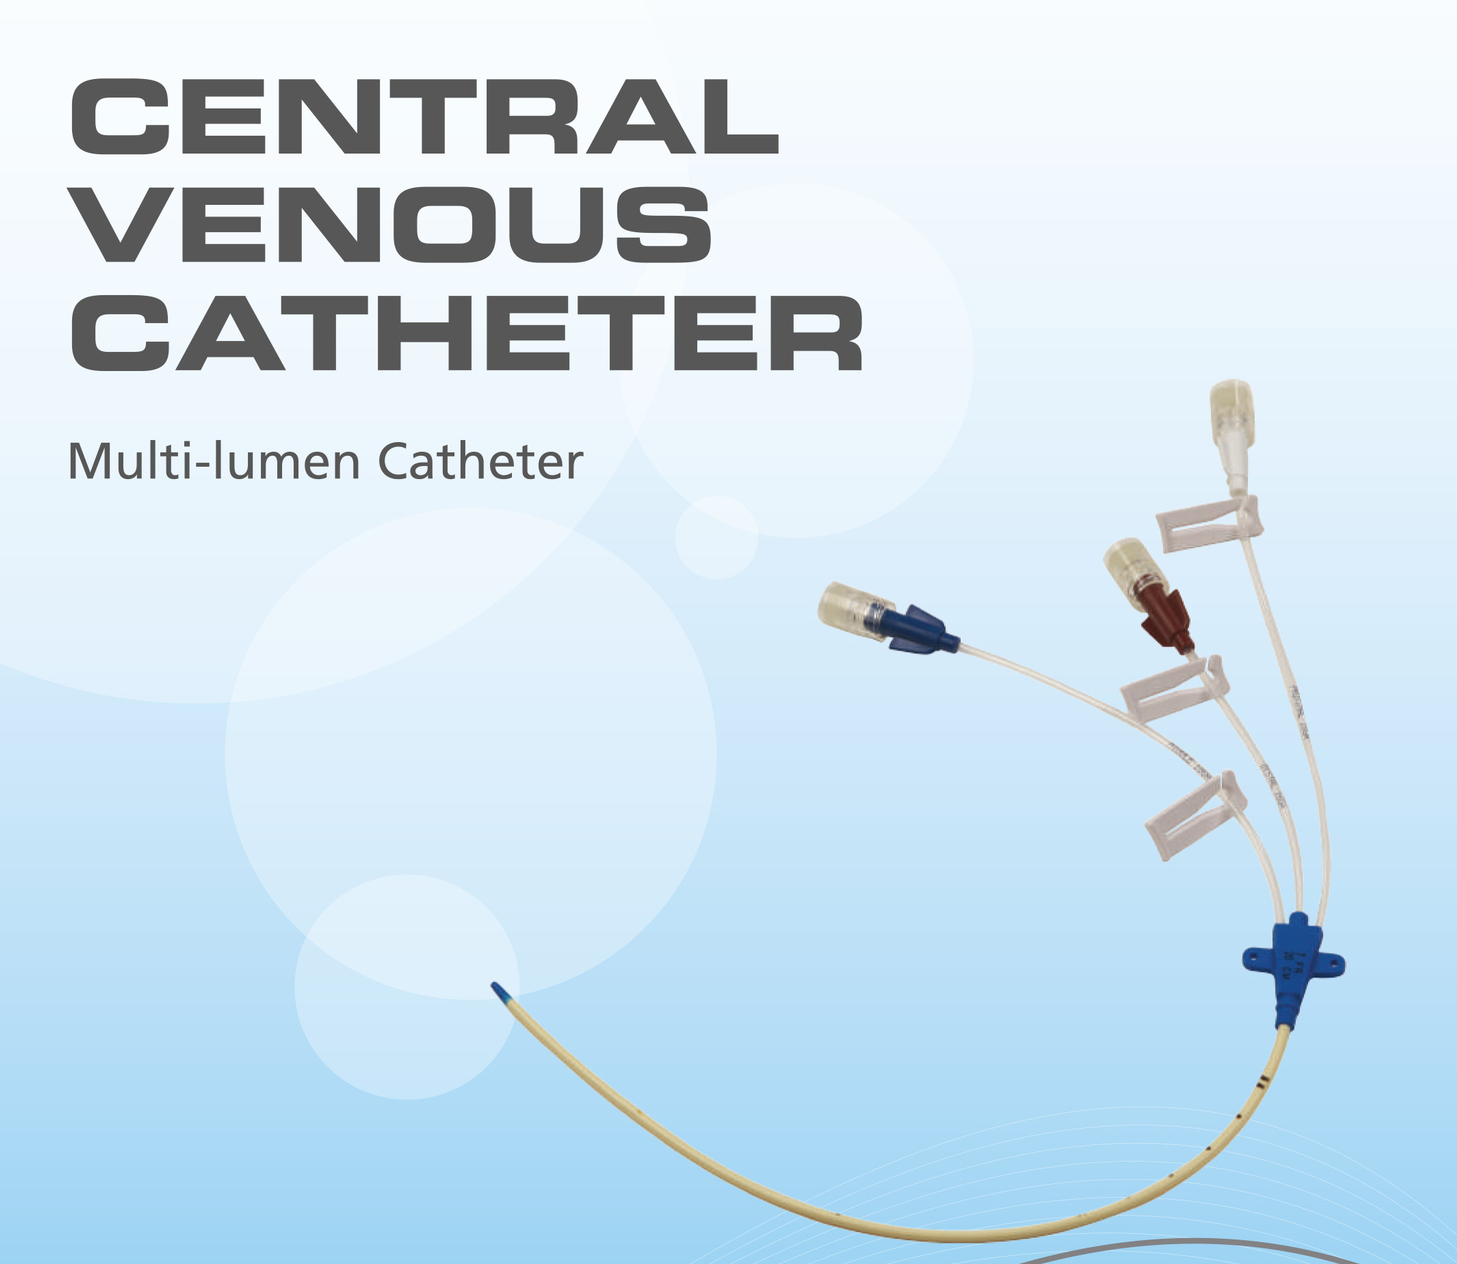 <p><span style="font-weight: bold;">Central Venous Catheter Multi-lumen Catheter</span><br></p>